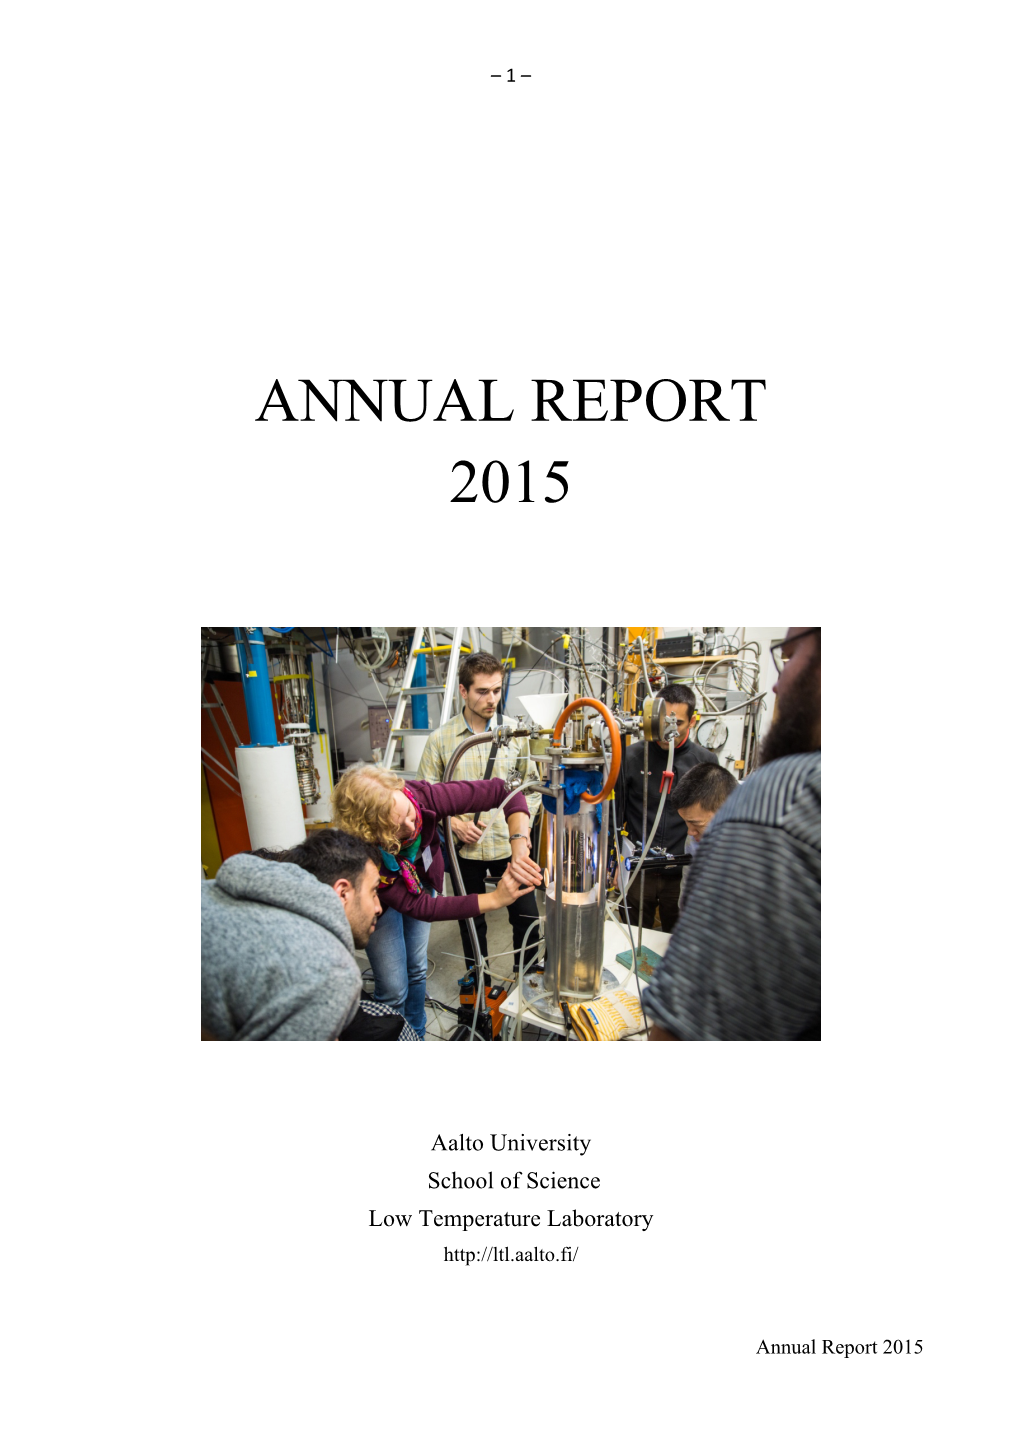 LTL Annual Report 2015 161107